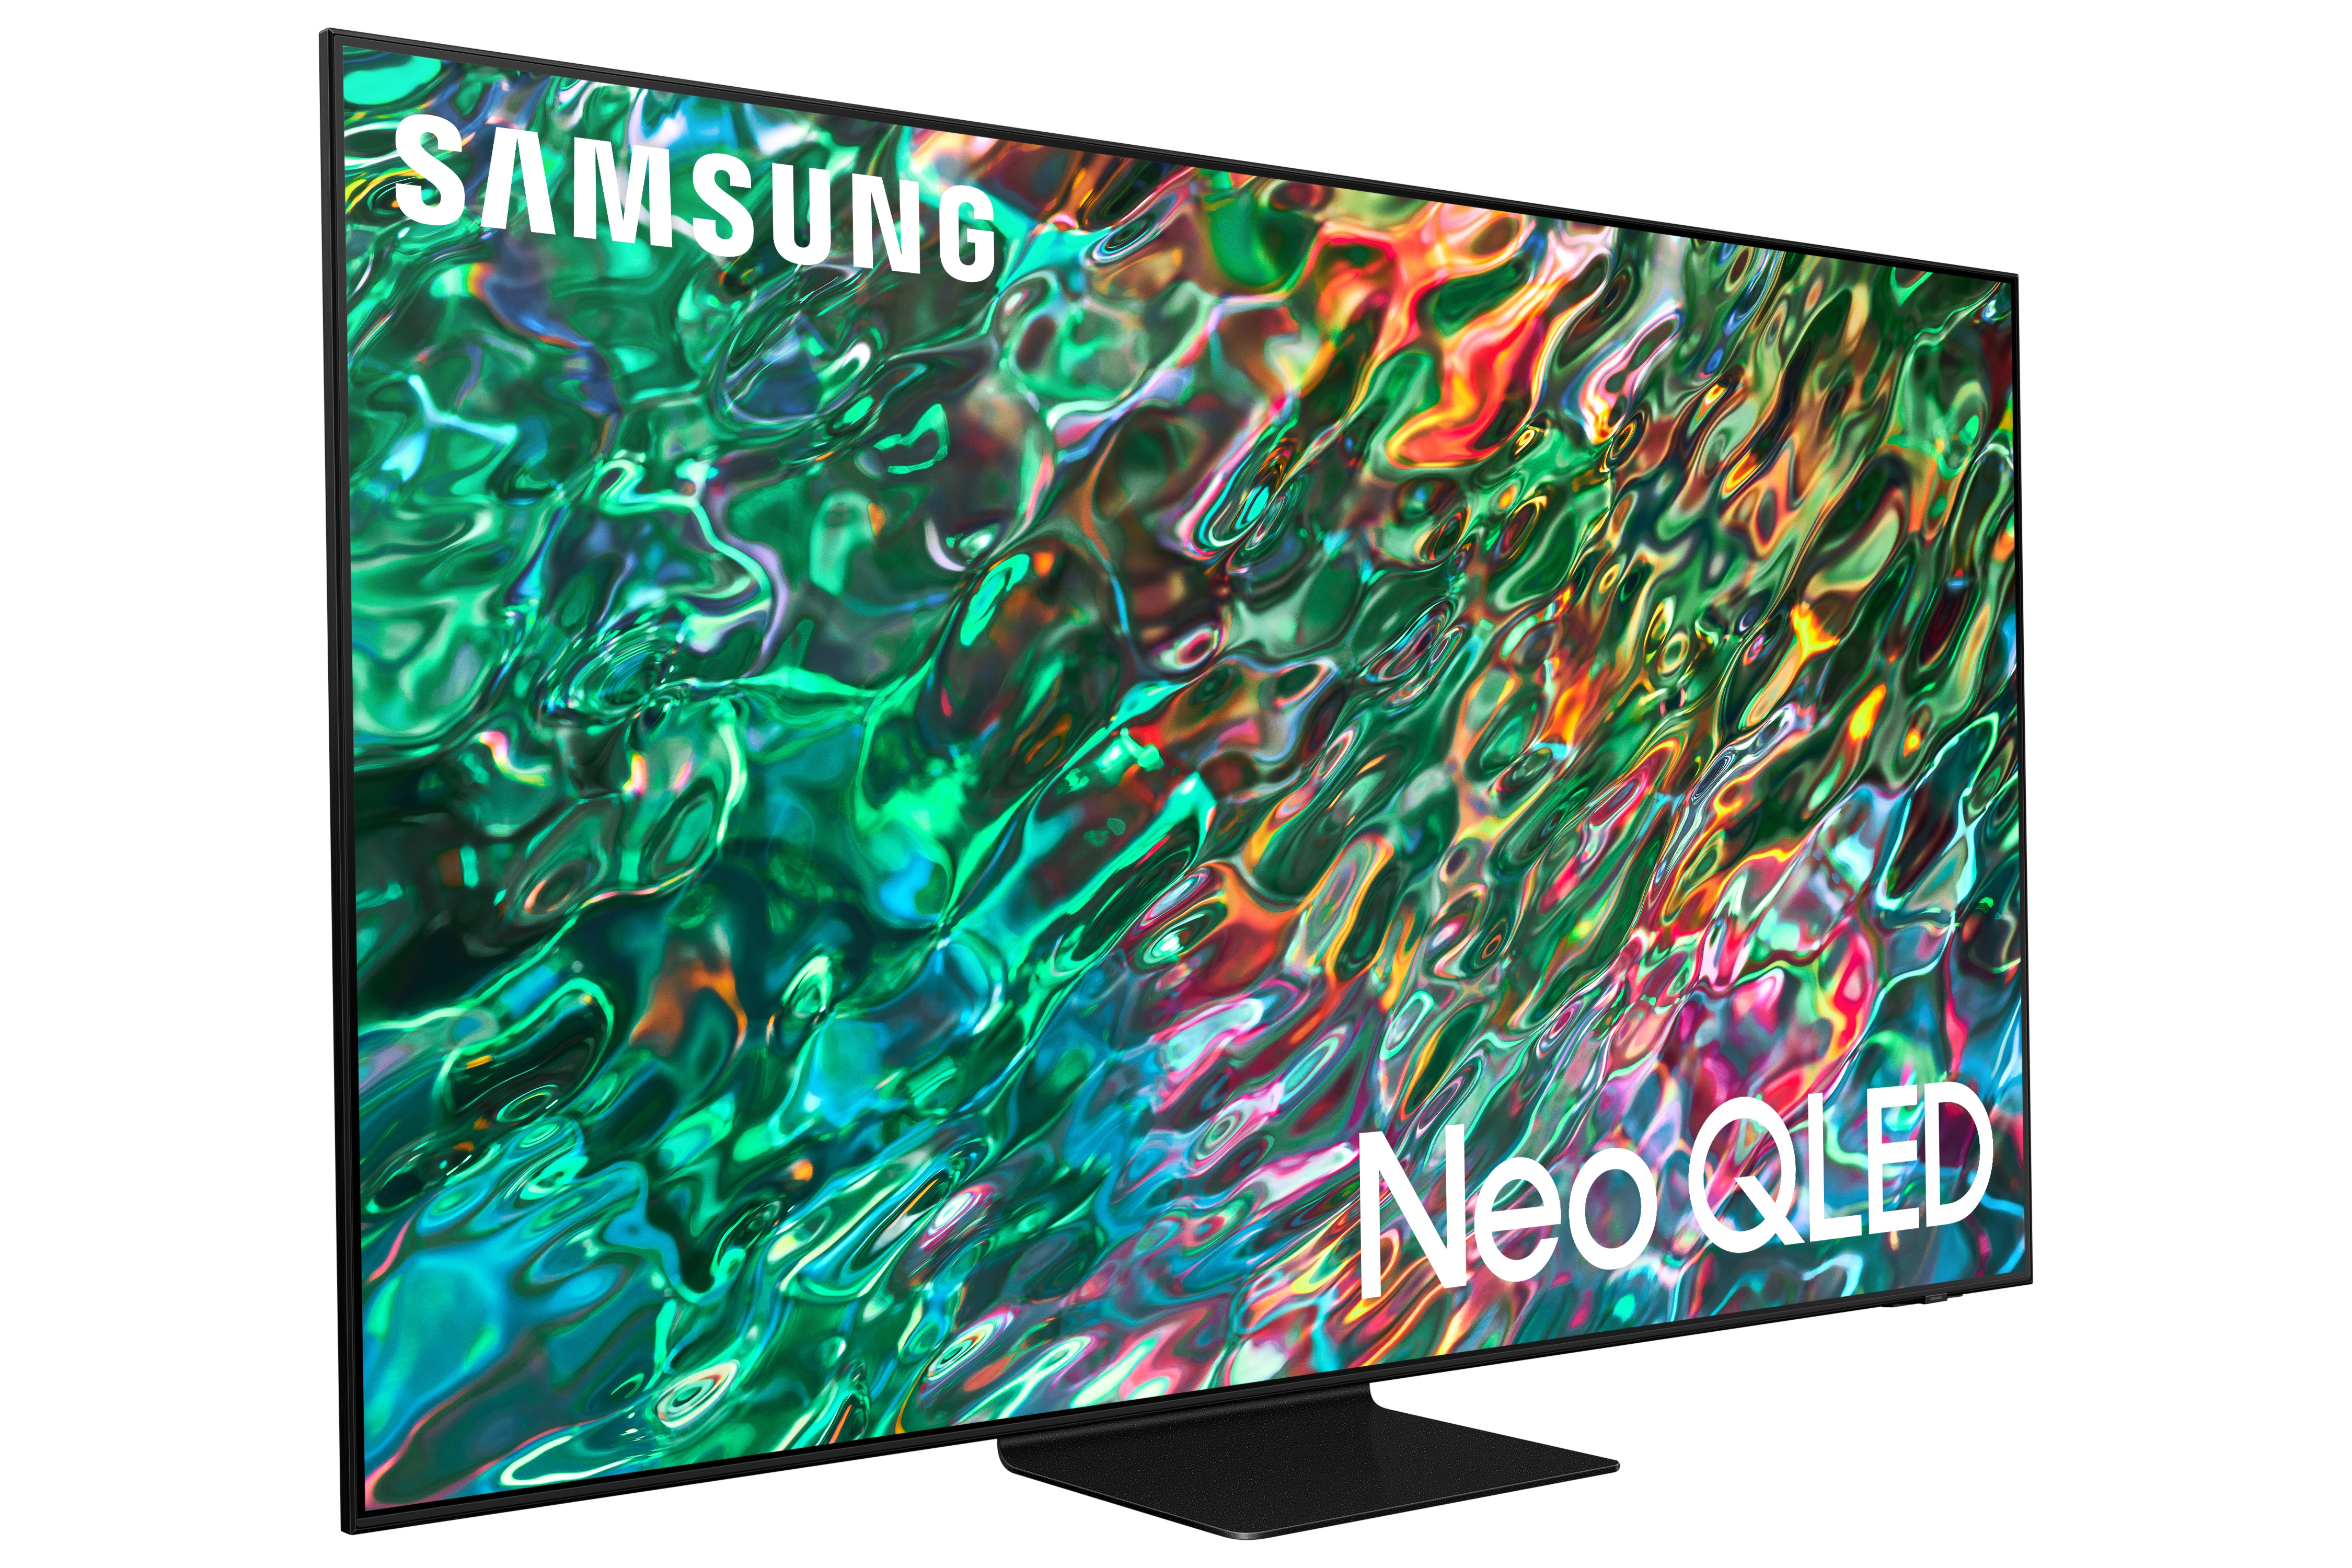 Samsung Pantalla 65” NEO QLED 4K UHD Smart TV | Costco Mé